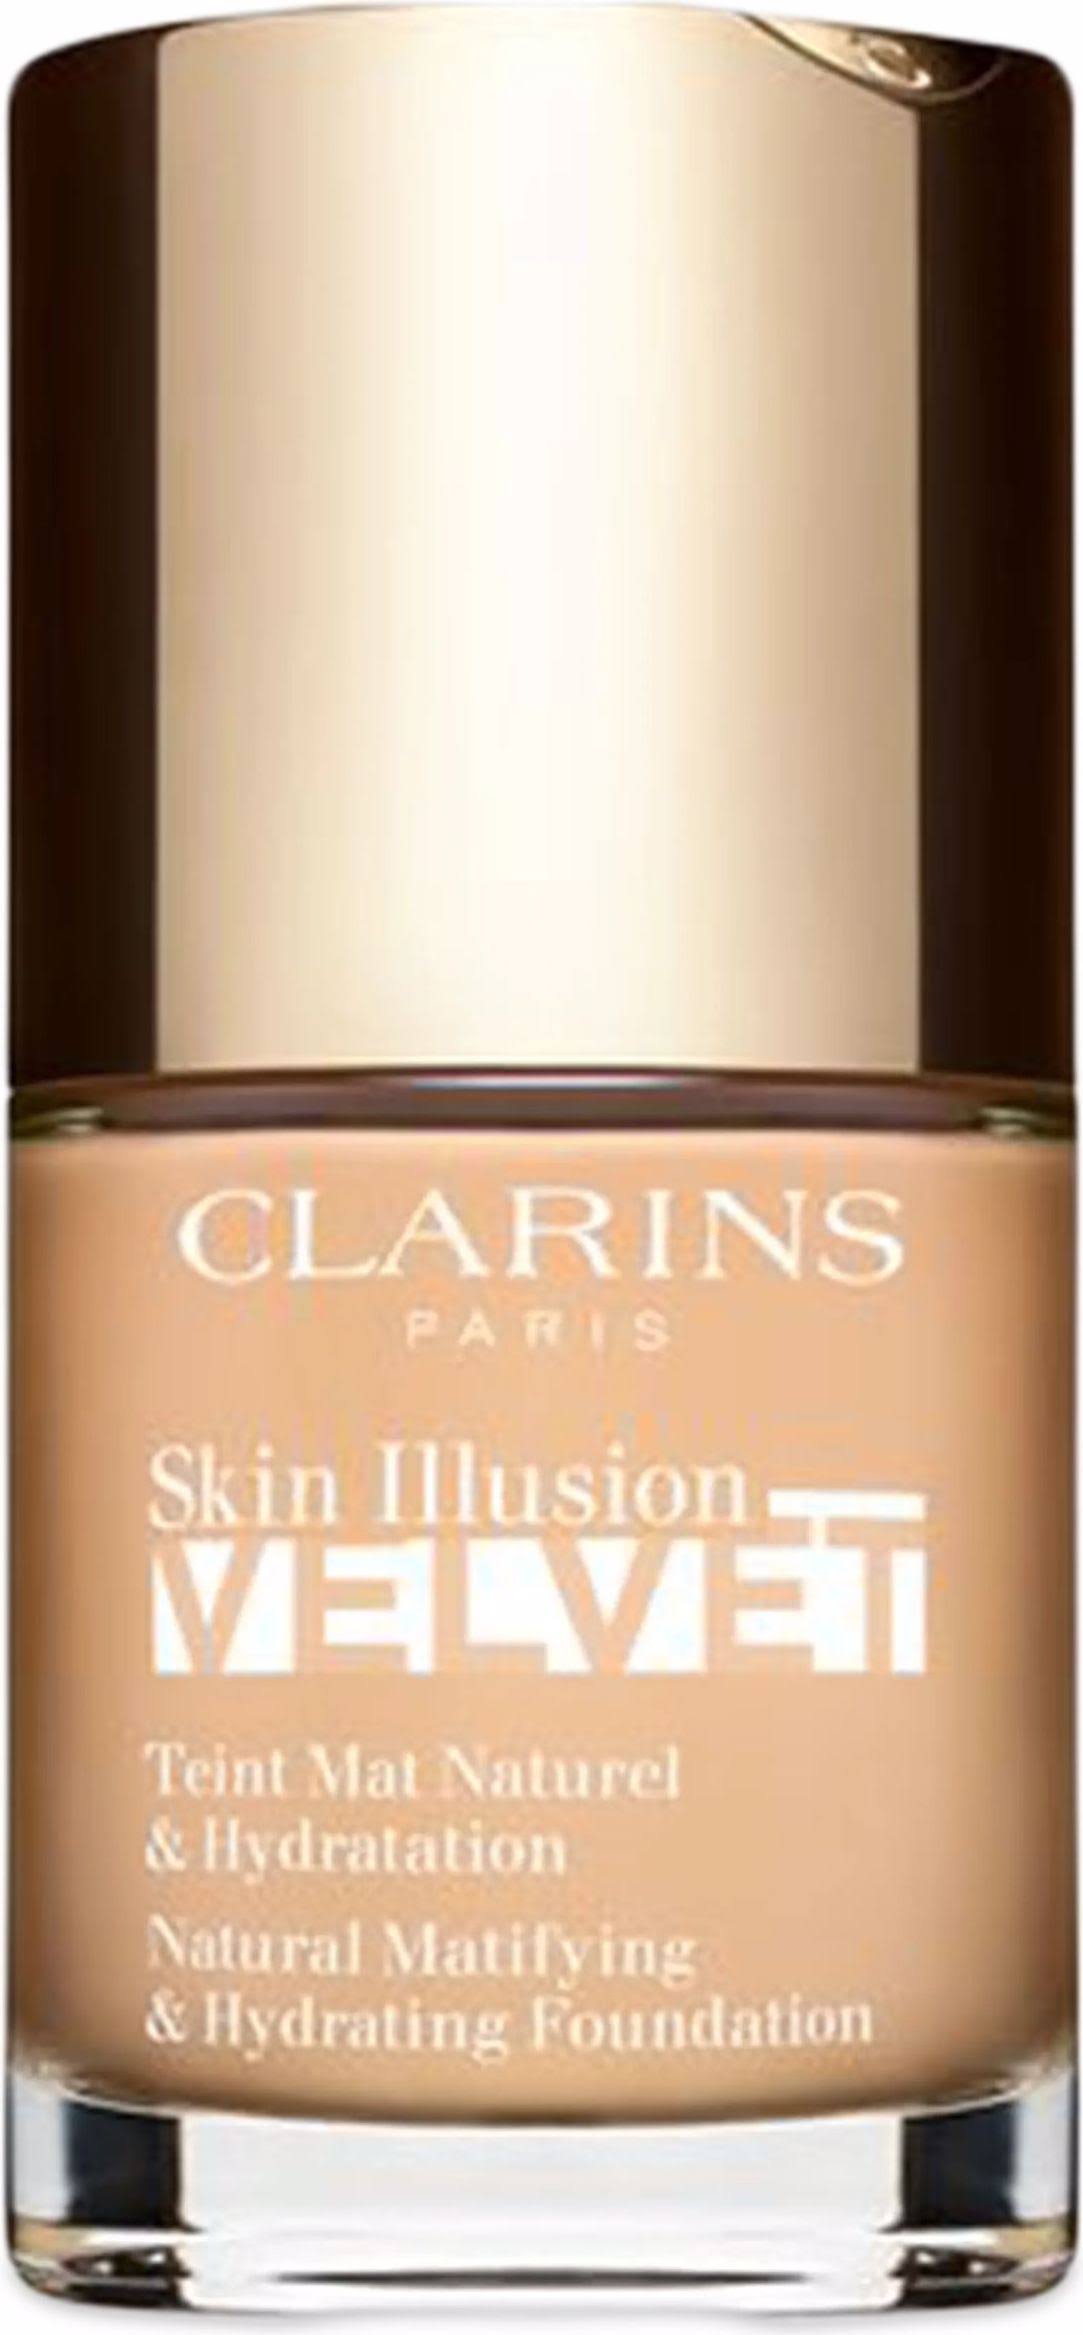 CLARINS - Skin Illusion Velvet 30 ml - 103N